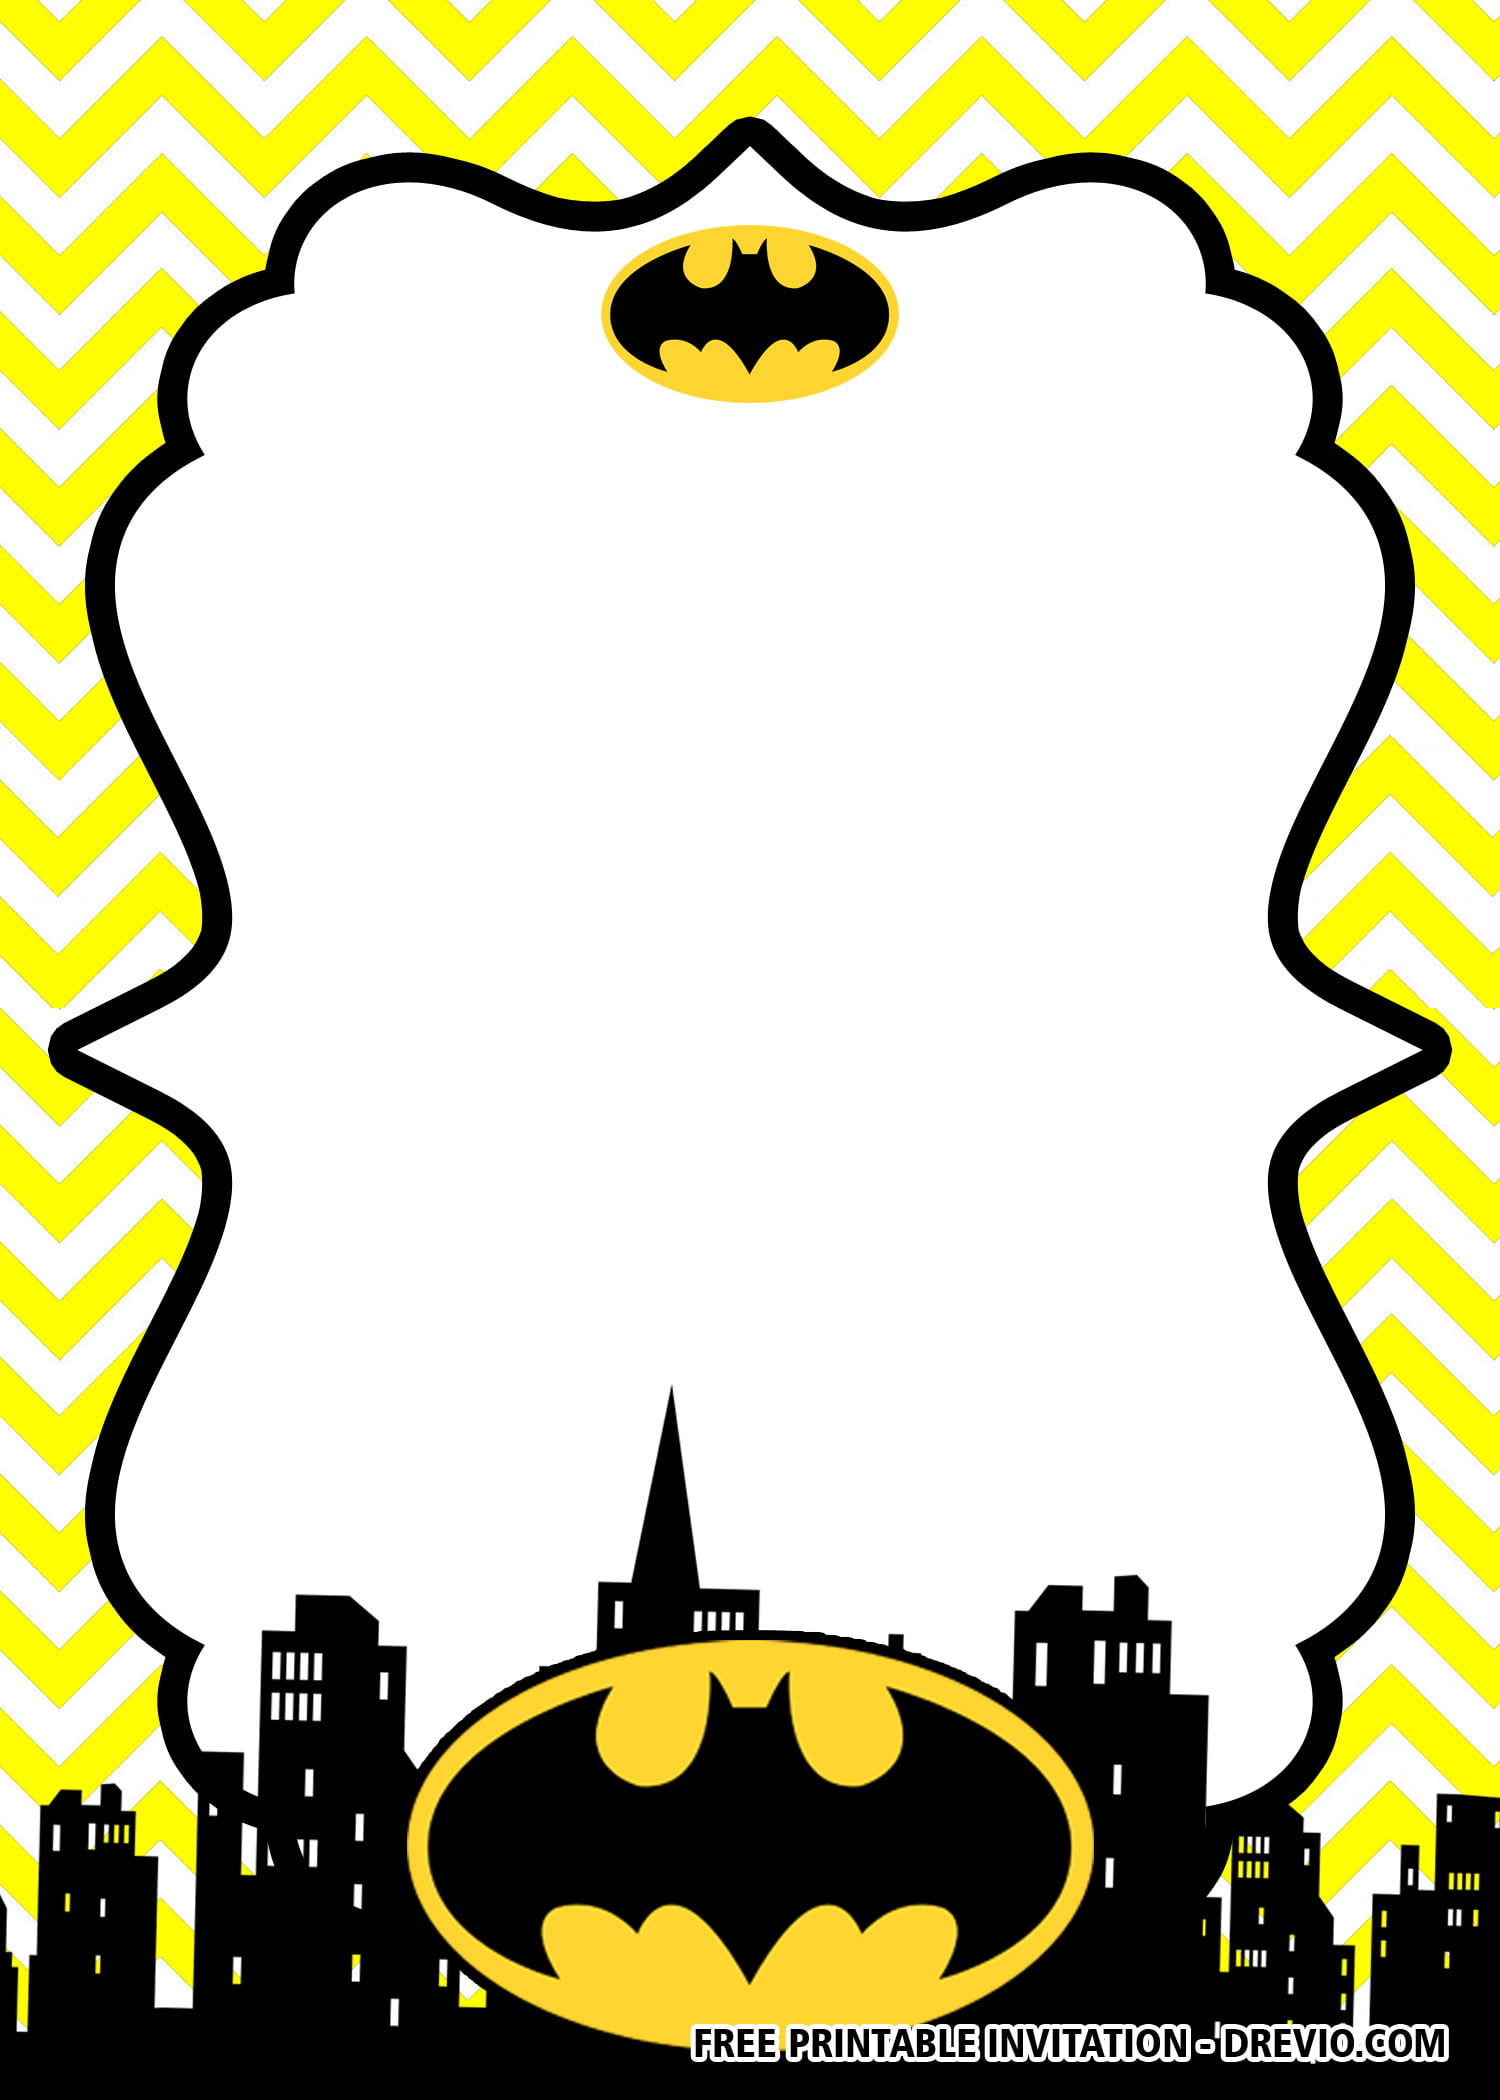 free-printable-batman-birthday-invitation-templates-download-hundreds